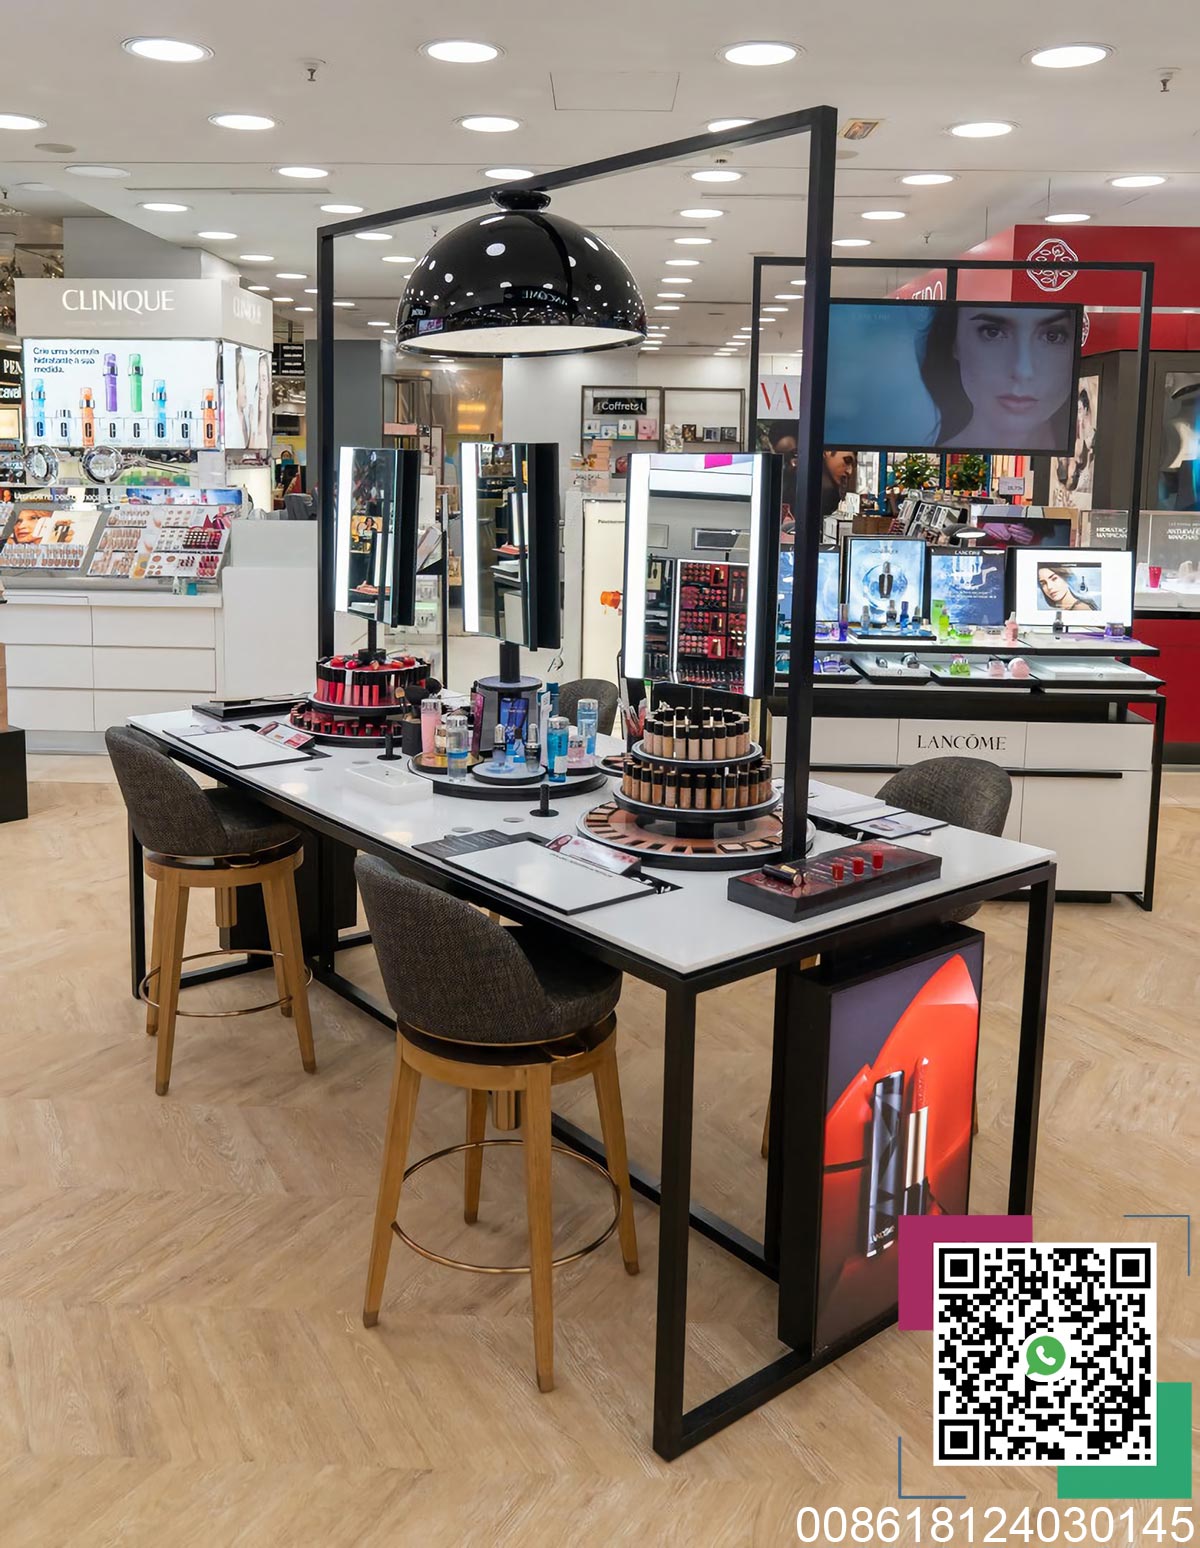 Lancôme Cosmetics Mall Kiosk - El Corte Inglés Lisboa (Portugal) - M2 Retail